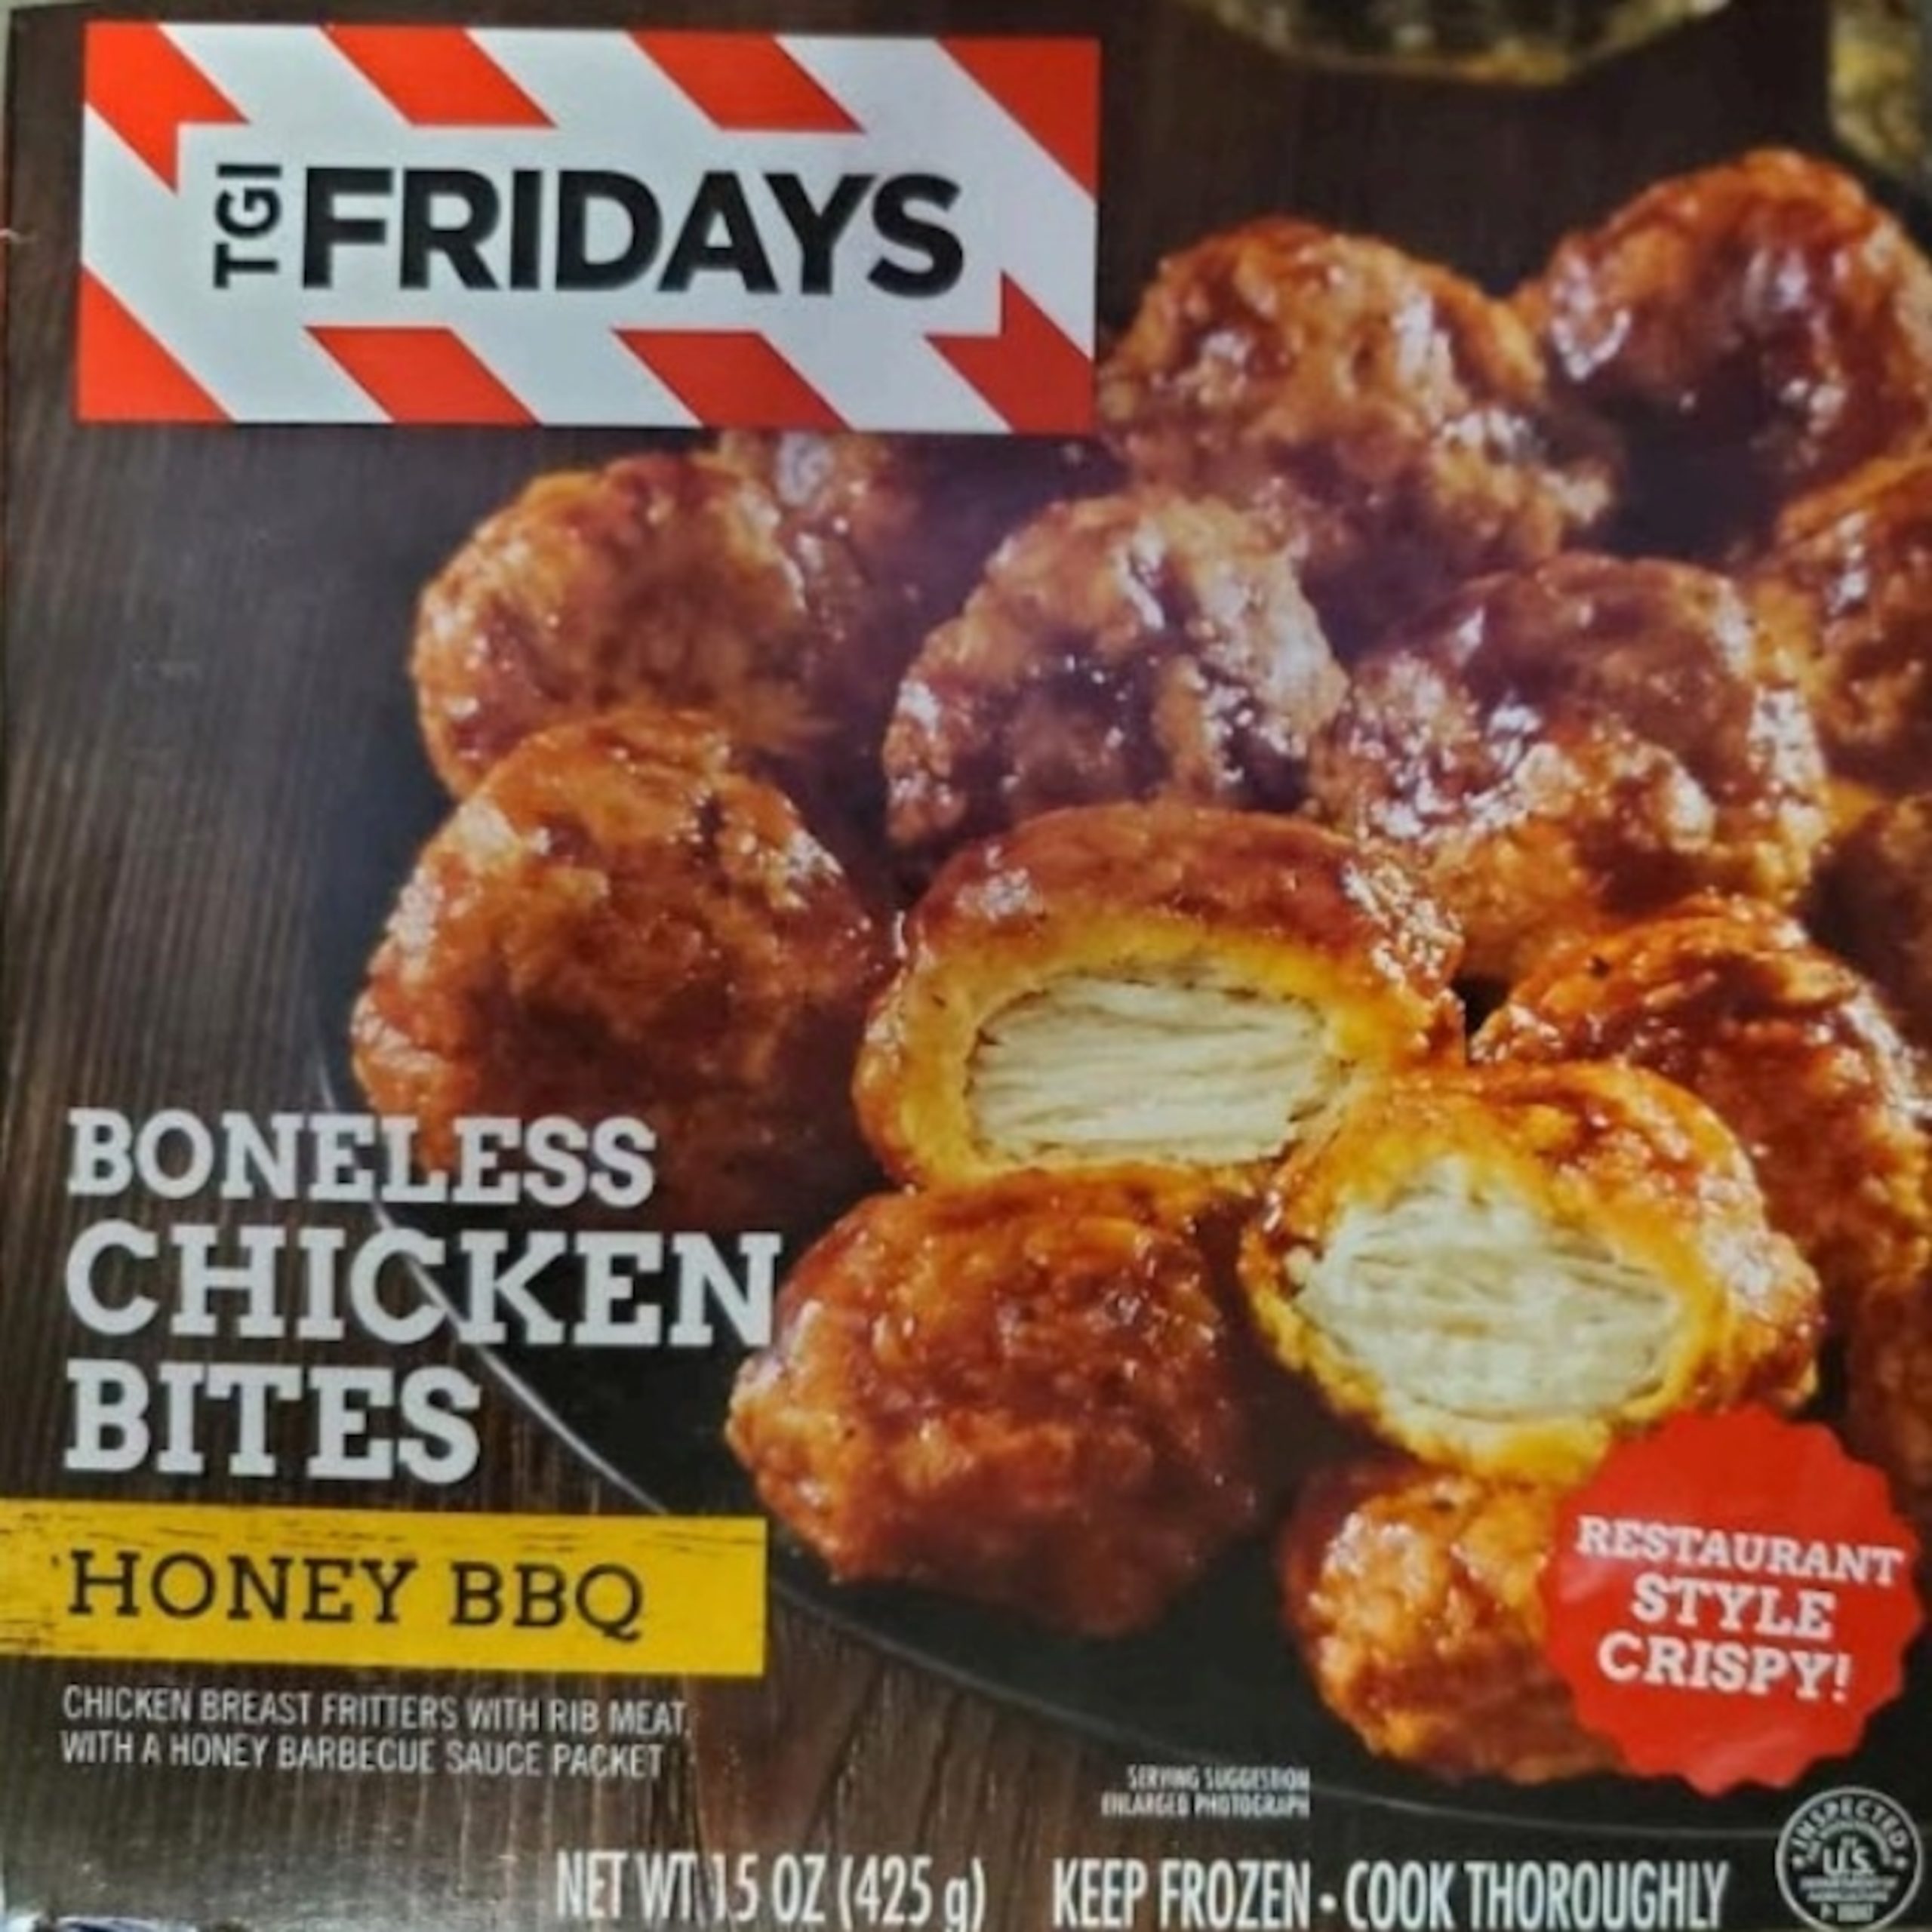 Possible plastic contamination prompts recall of TGI Fridays boneless chicken bites